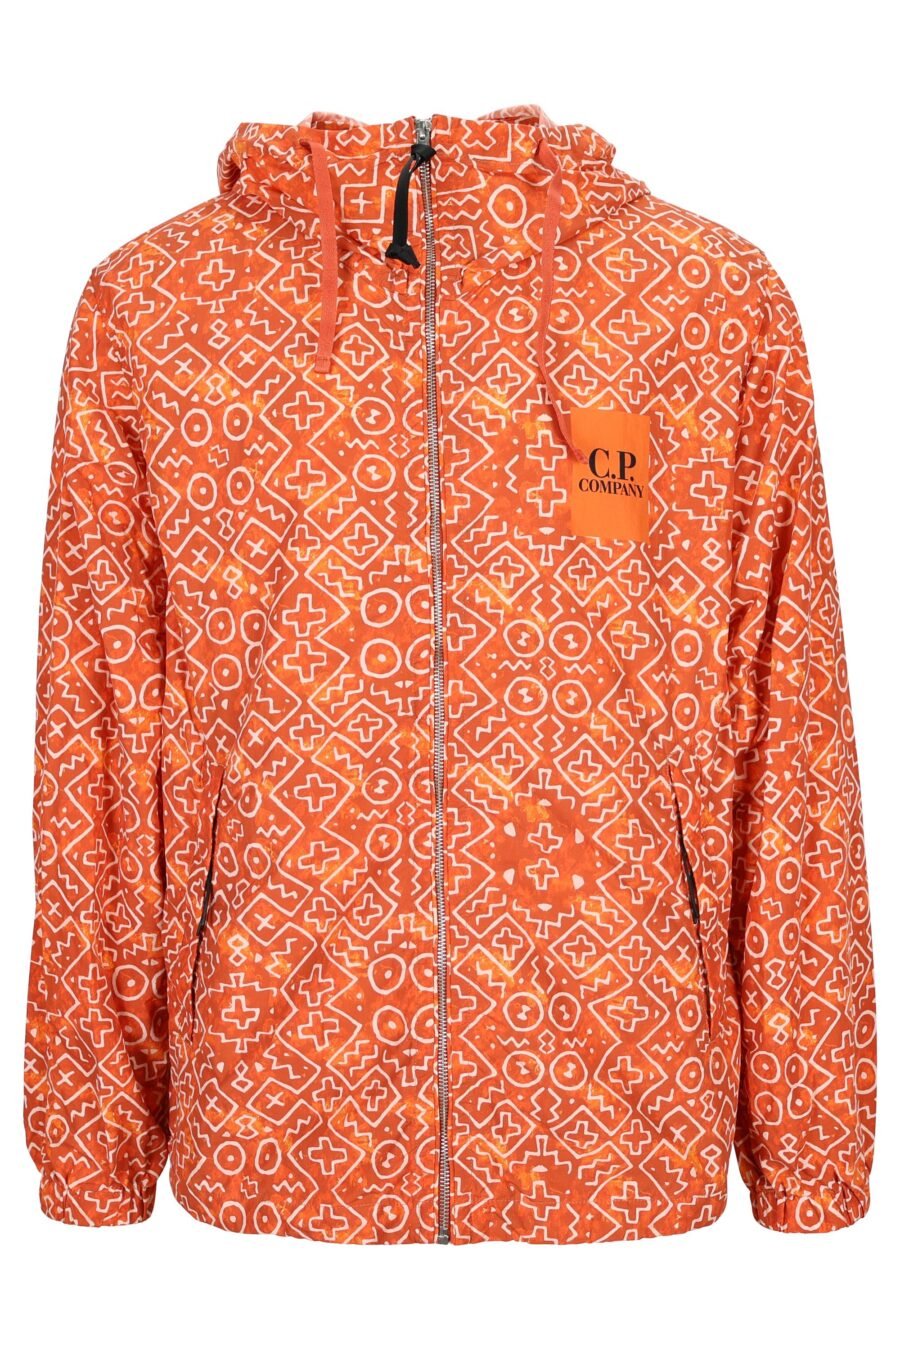 Rötlich-orangefarbene Jacke mit Logo - 7620943777796